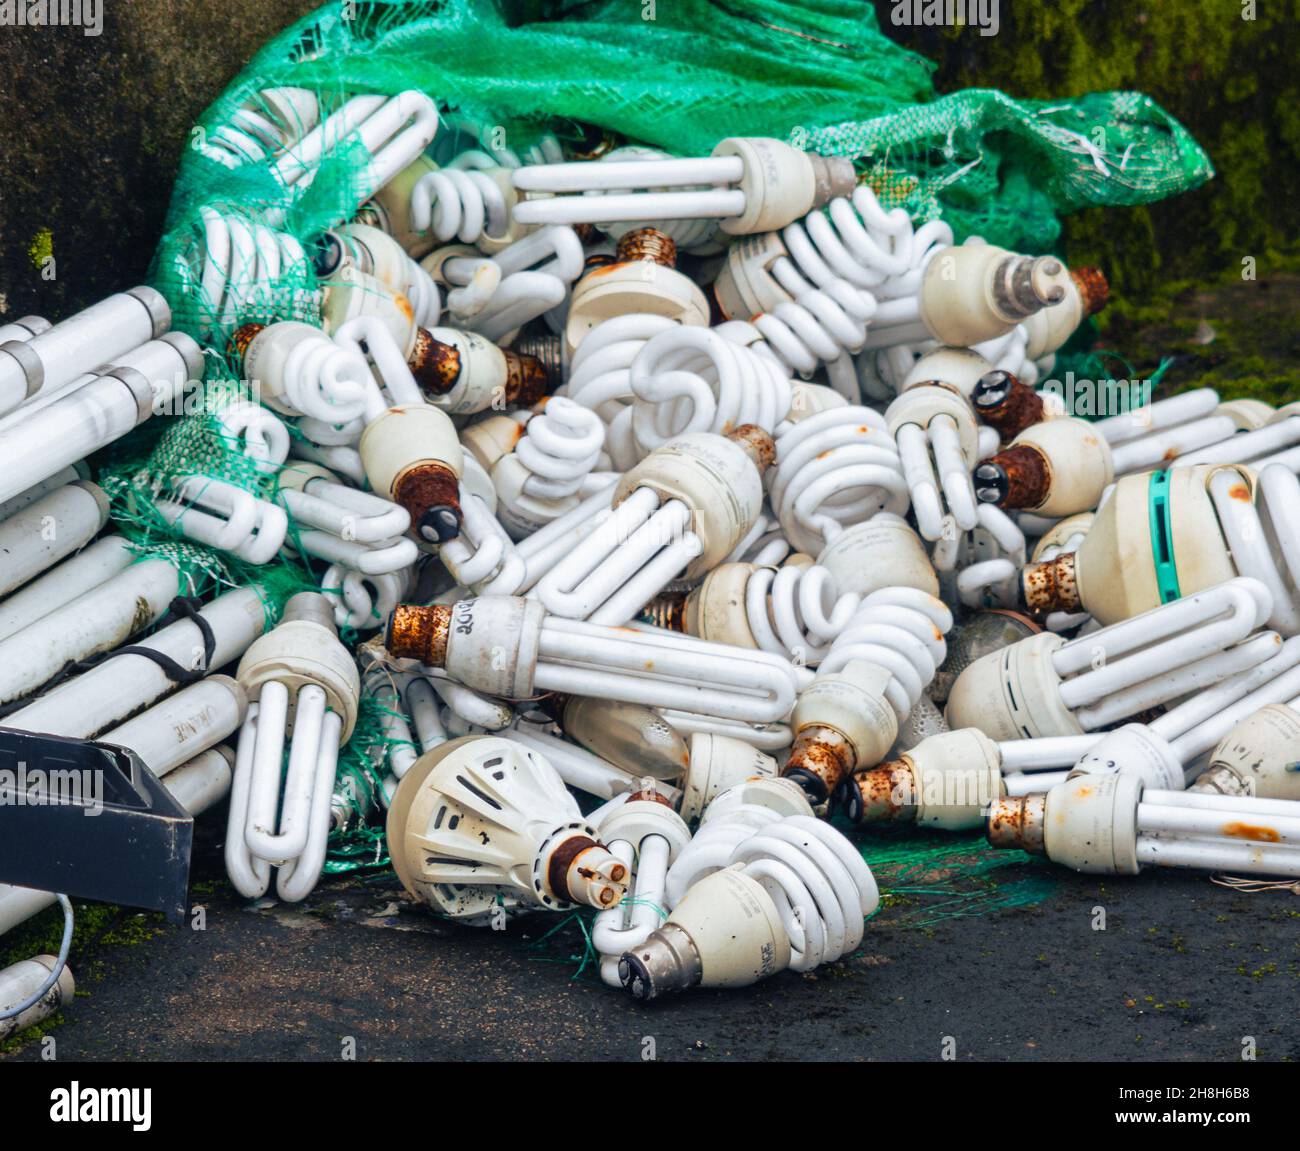 'Discarded electronics', Recycling, Hazardous waste Stock Photo